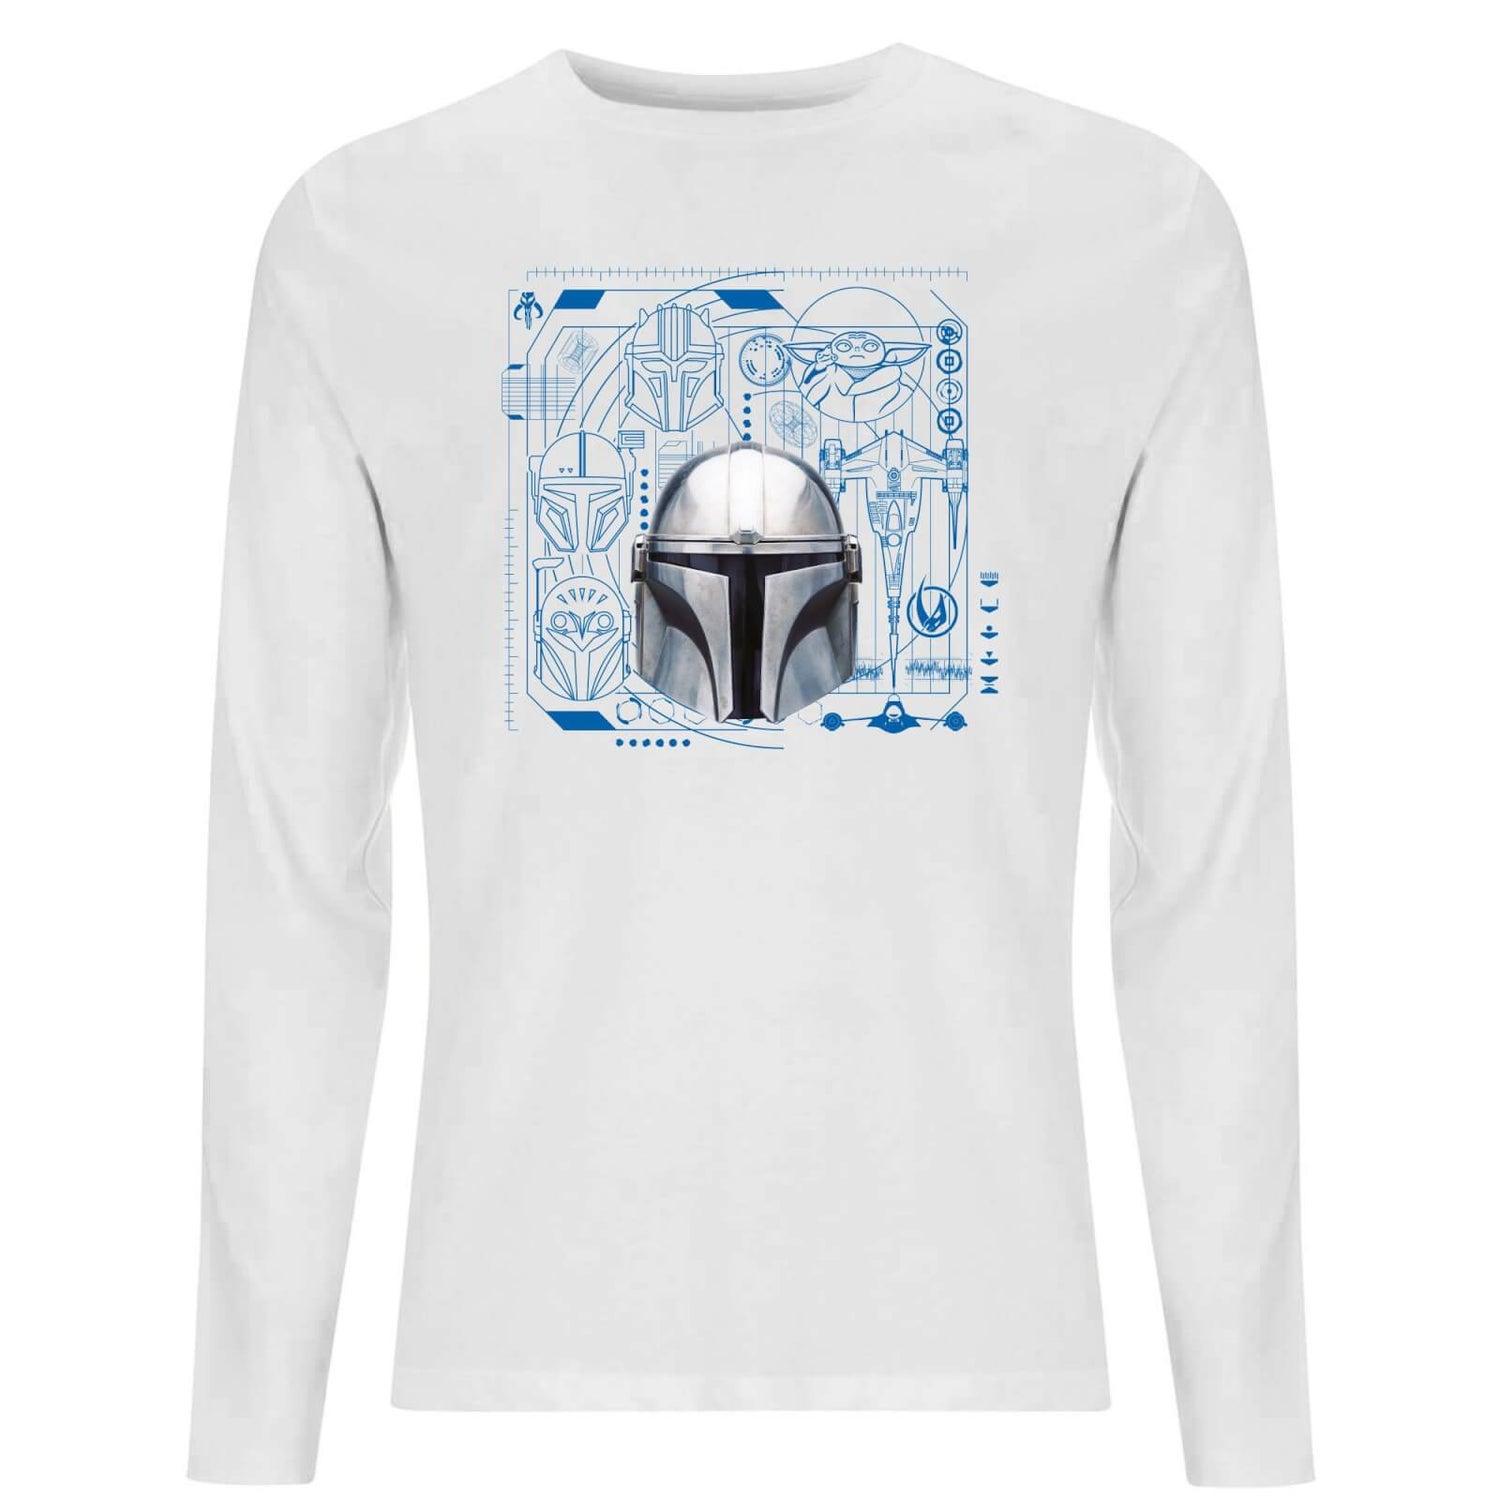 Star Wars The Mandalorian Schematics Men's Long Sleeve T-Shirt - White